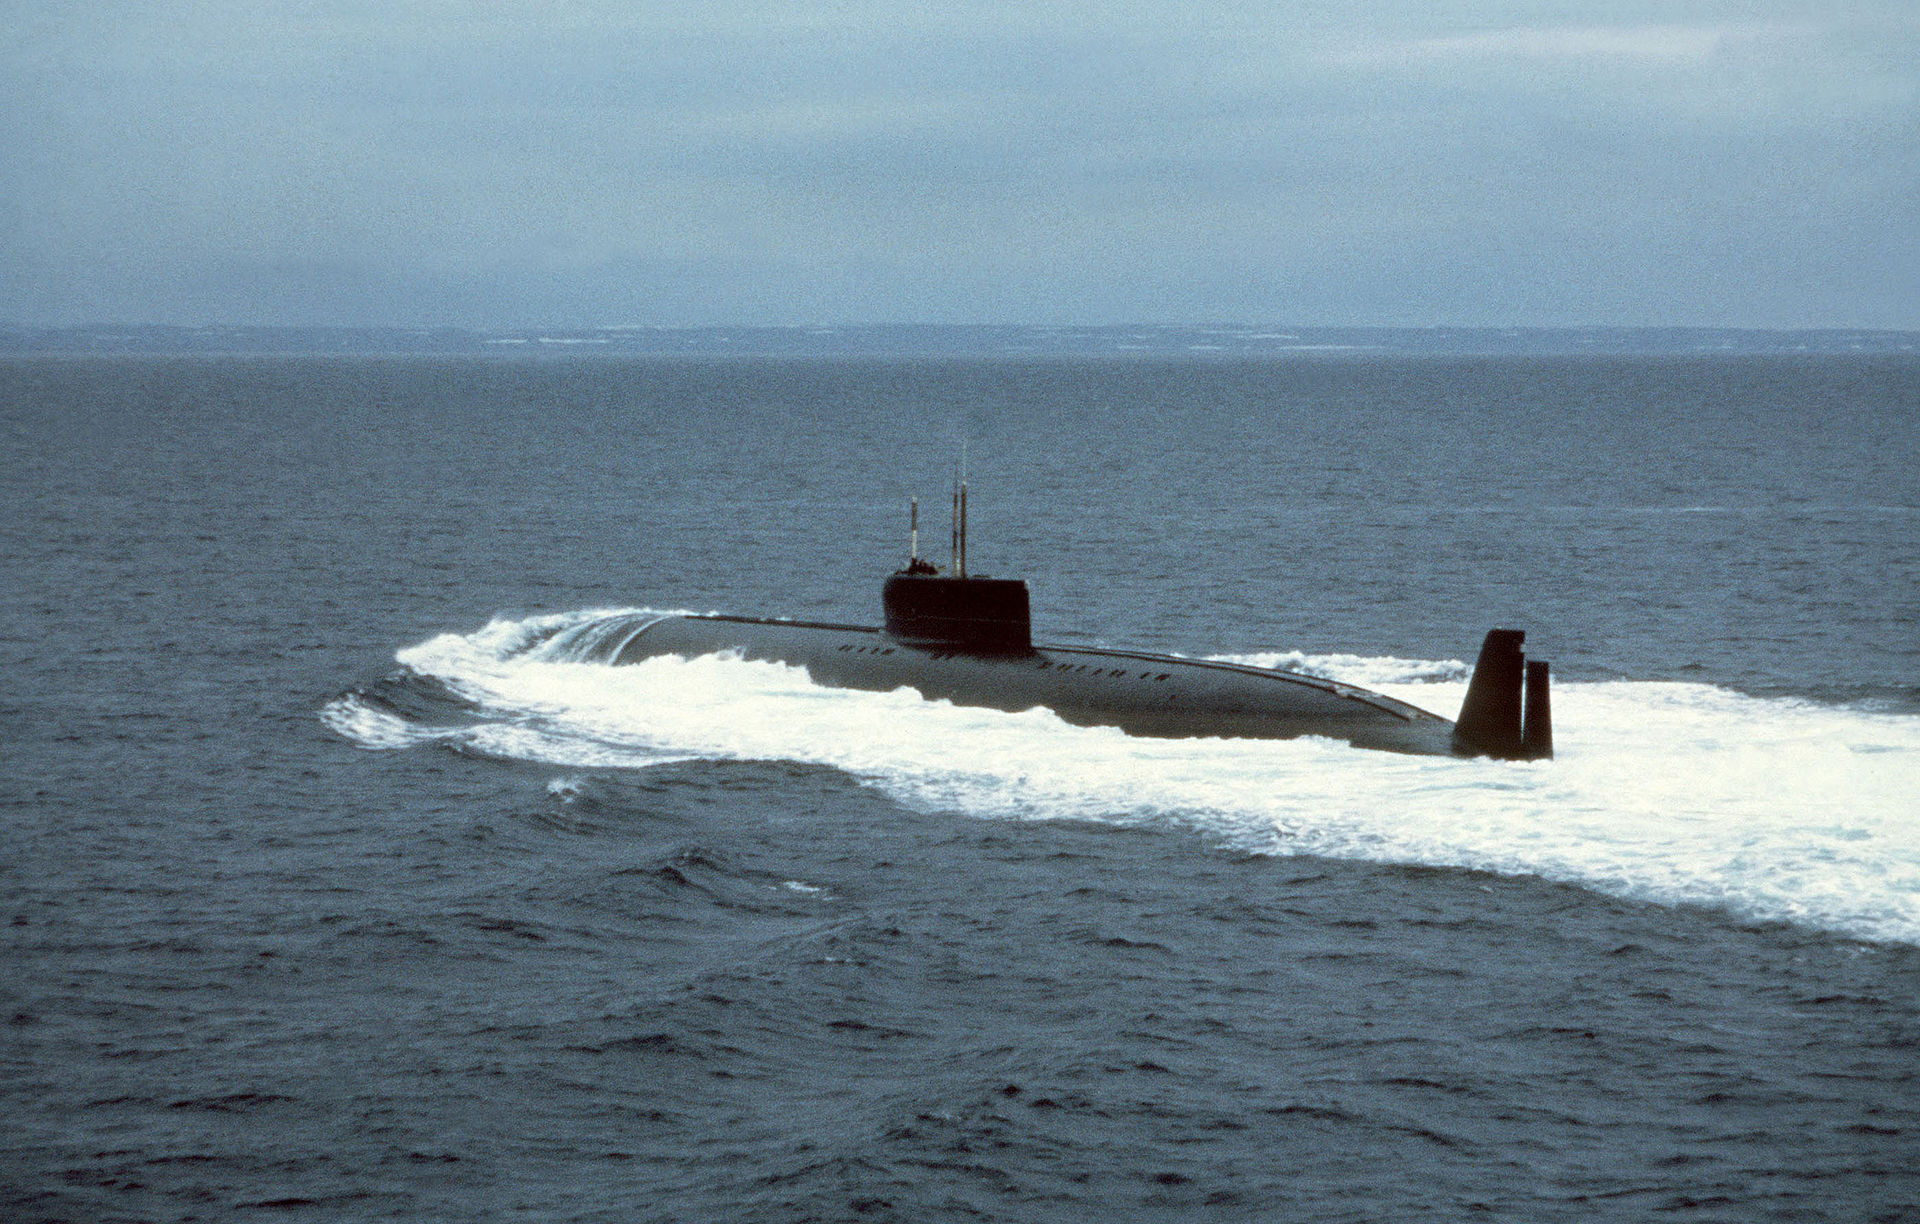 К-162 submarine on trial